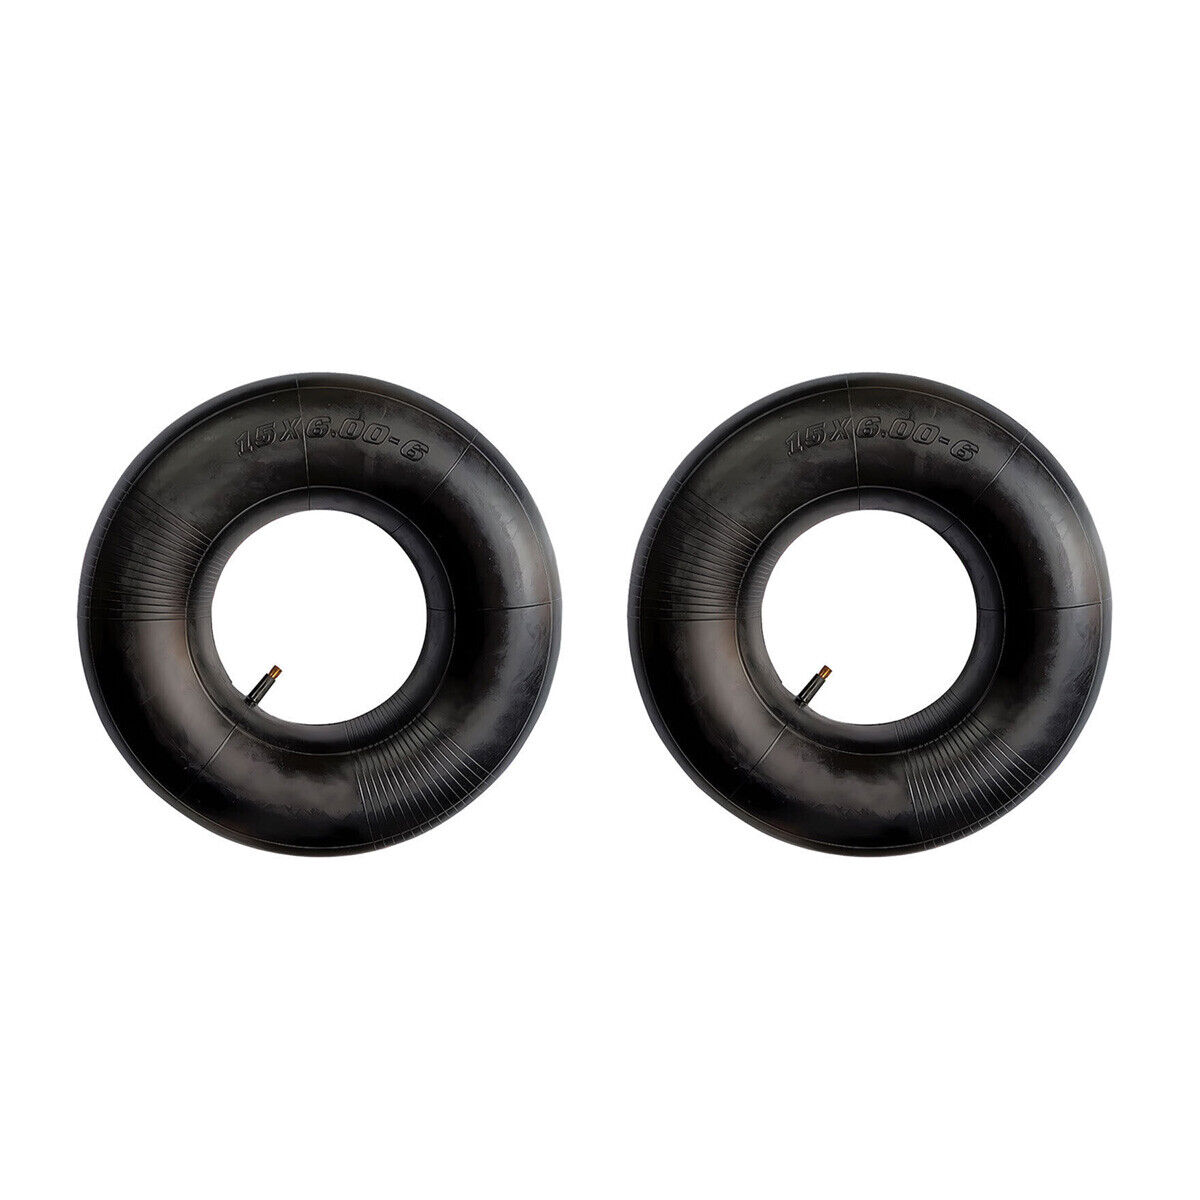 Pair of 15x6.00-6 Lawn Mower Tire Inner Tubes 15X6-6, 15X6x6, 15/6x6 TR13 Valve